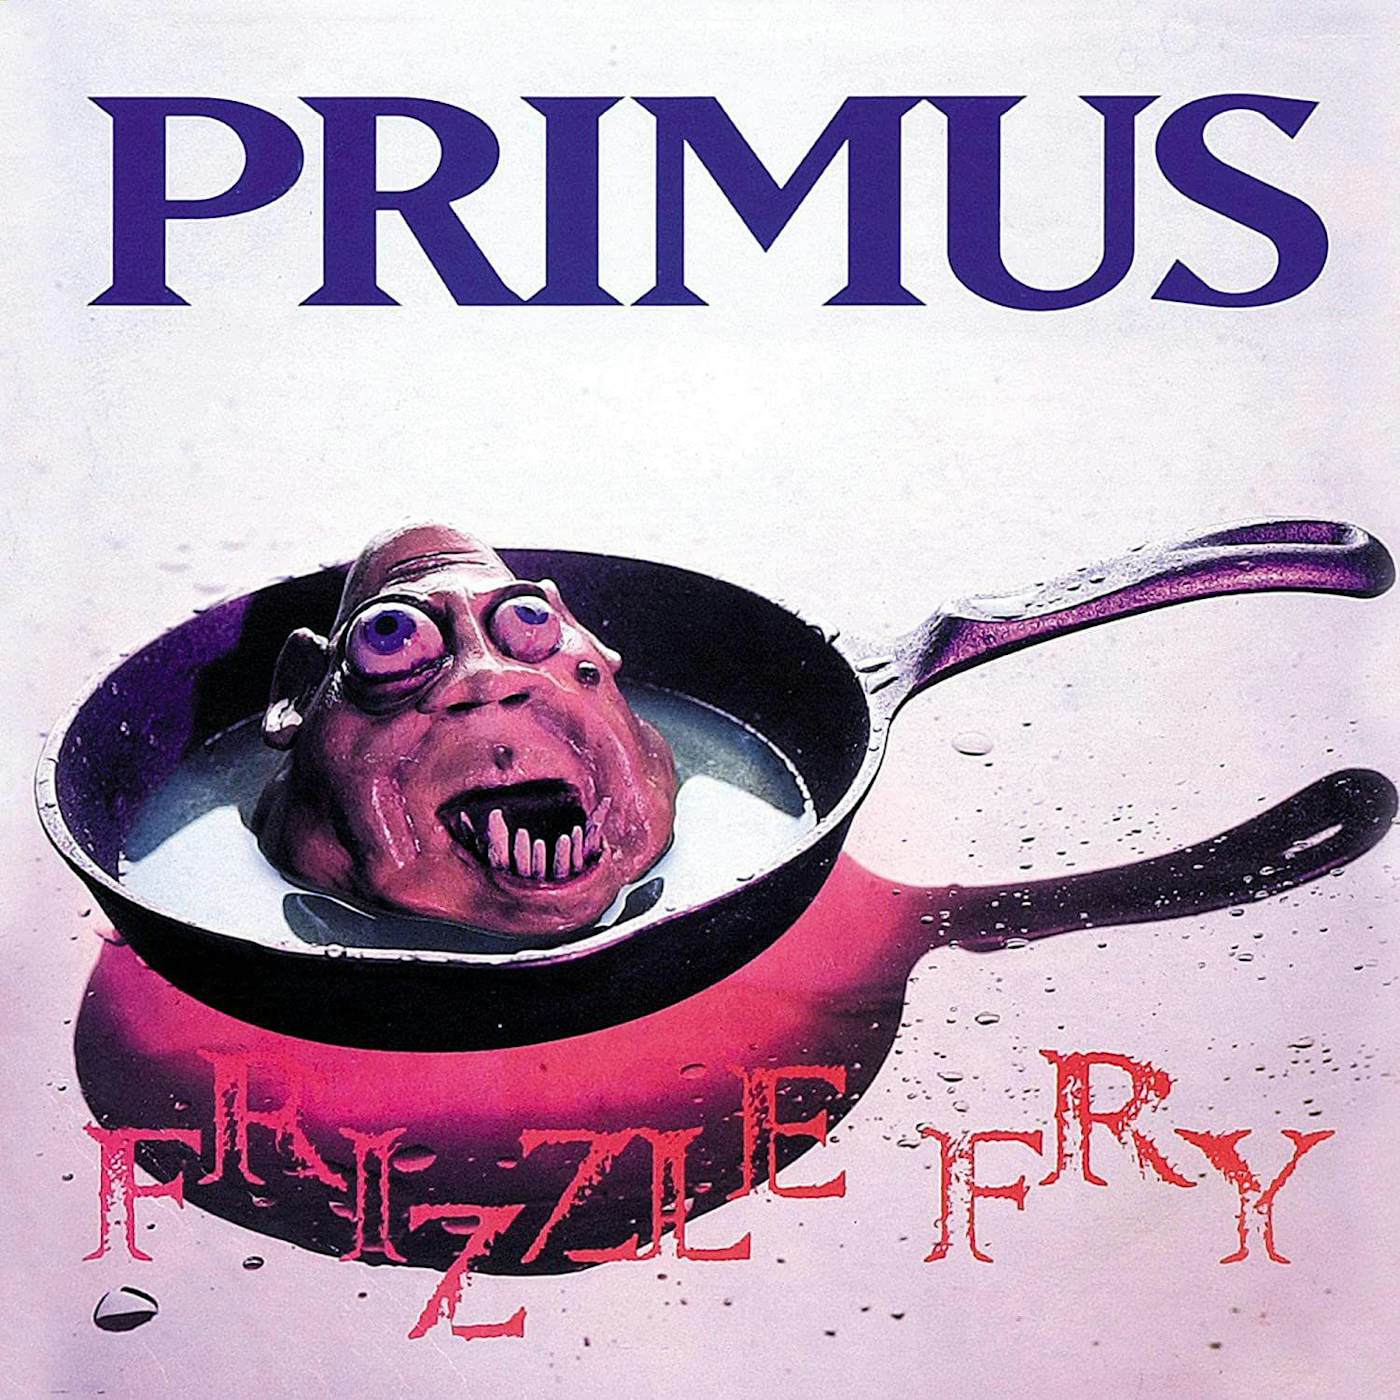 Primus Frizzle Fry Vinyl Record